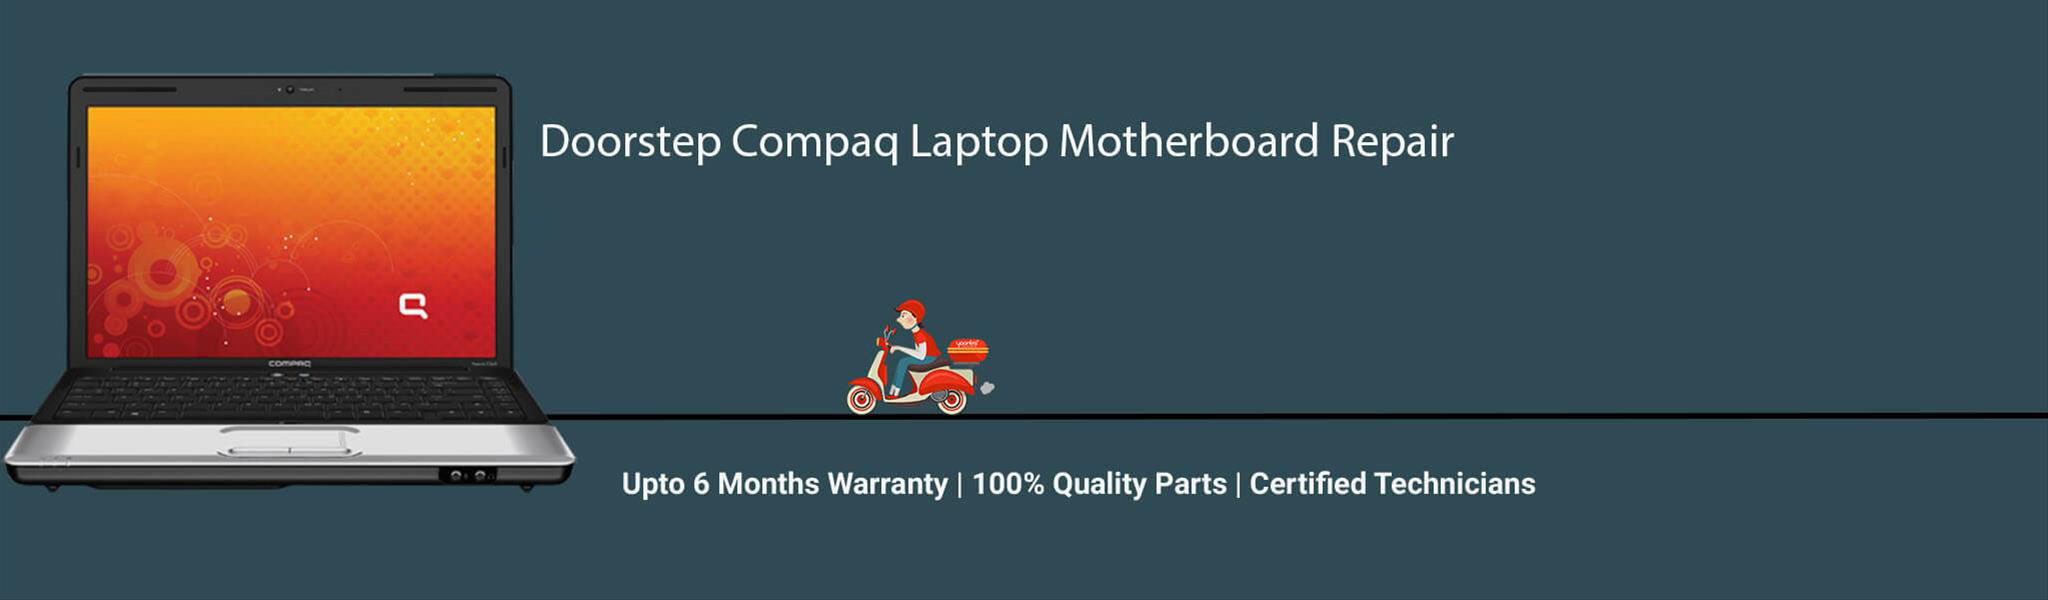 compaq-laptop-motherboard-repair.jpg